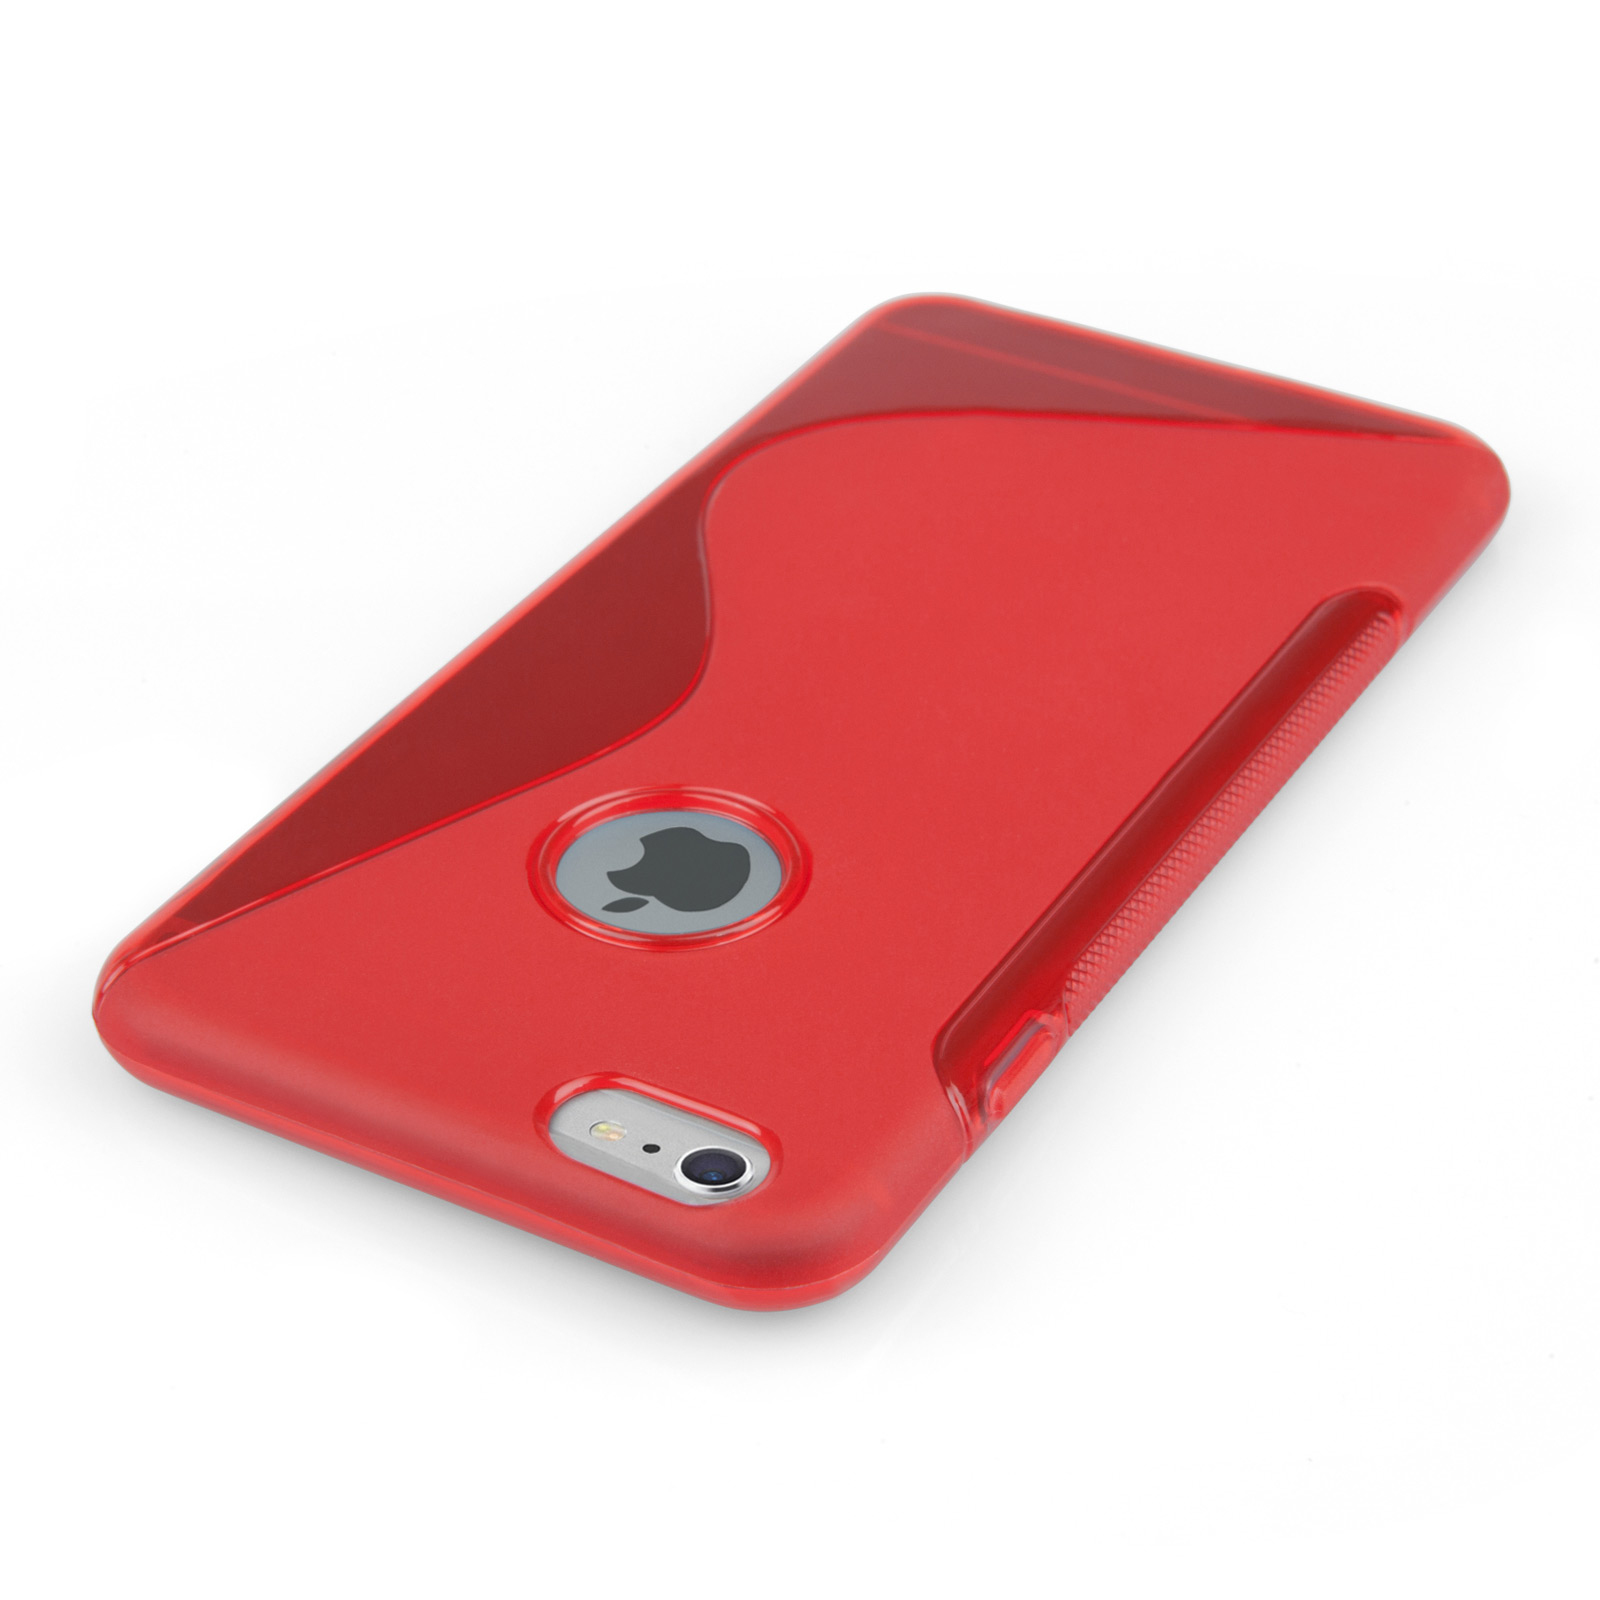 Caseflex iPhone 6 Plus and 6s Plus Silicone Gel S-Line Case - Red